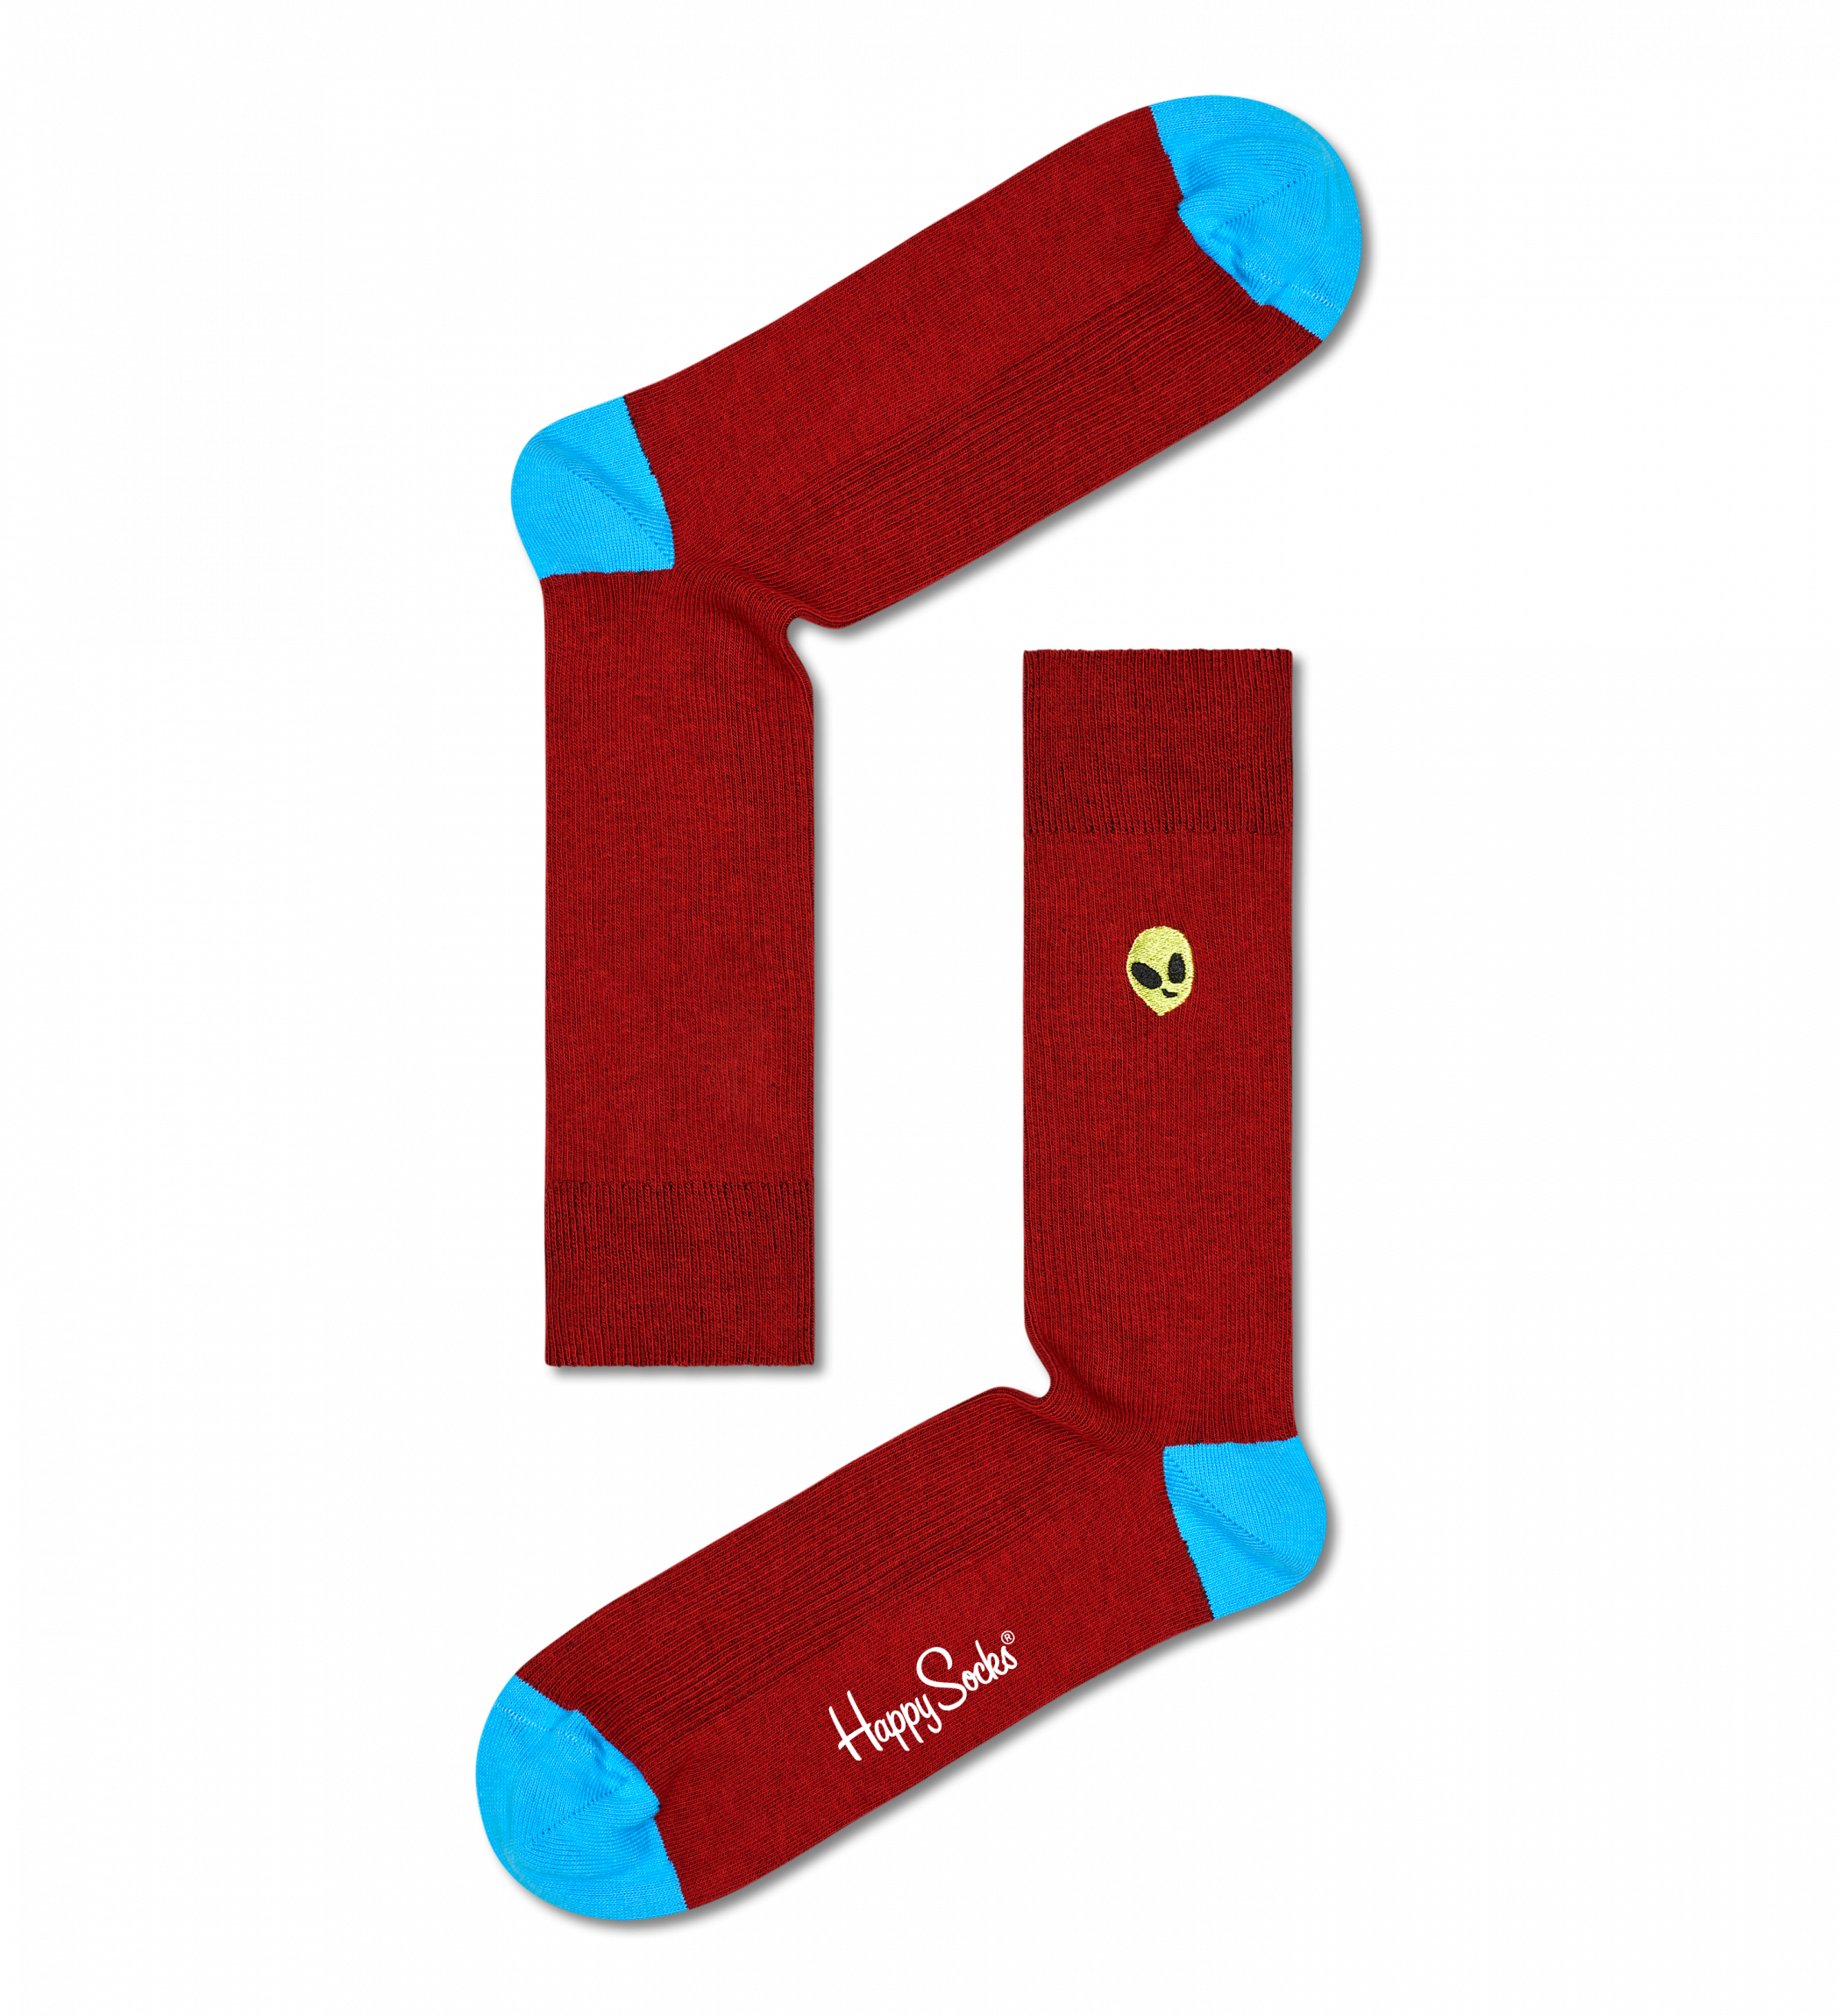 Vínové ponožky Happy Socks s vyšitým mimozemšťanom, vzor Alien